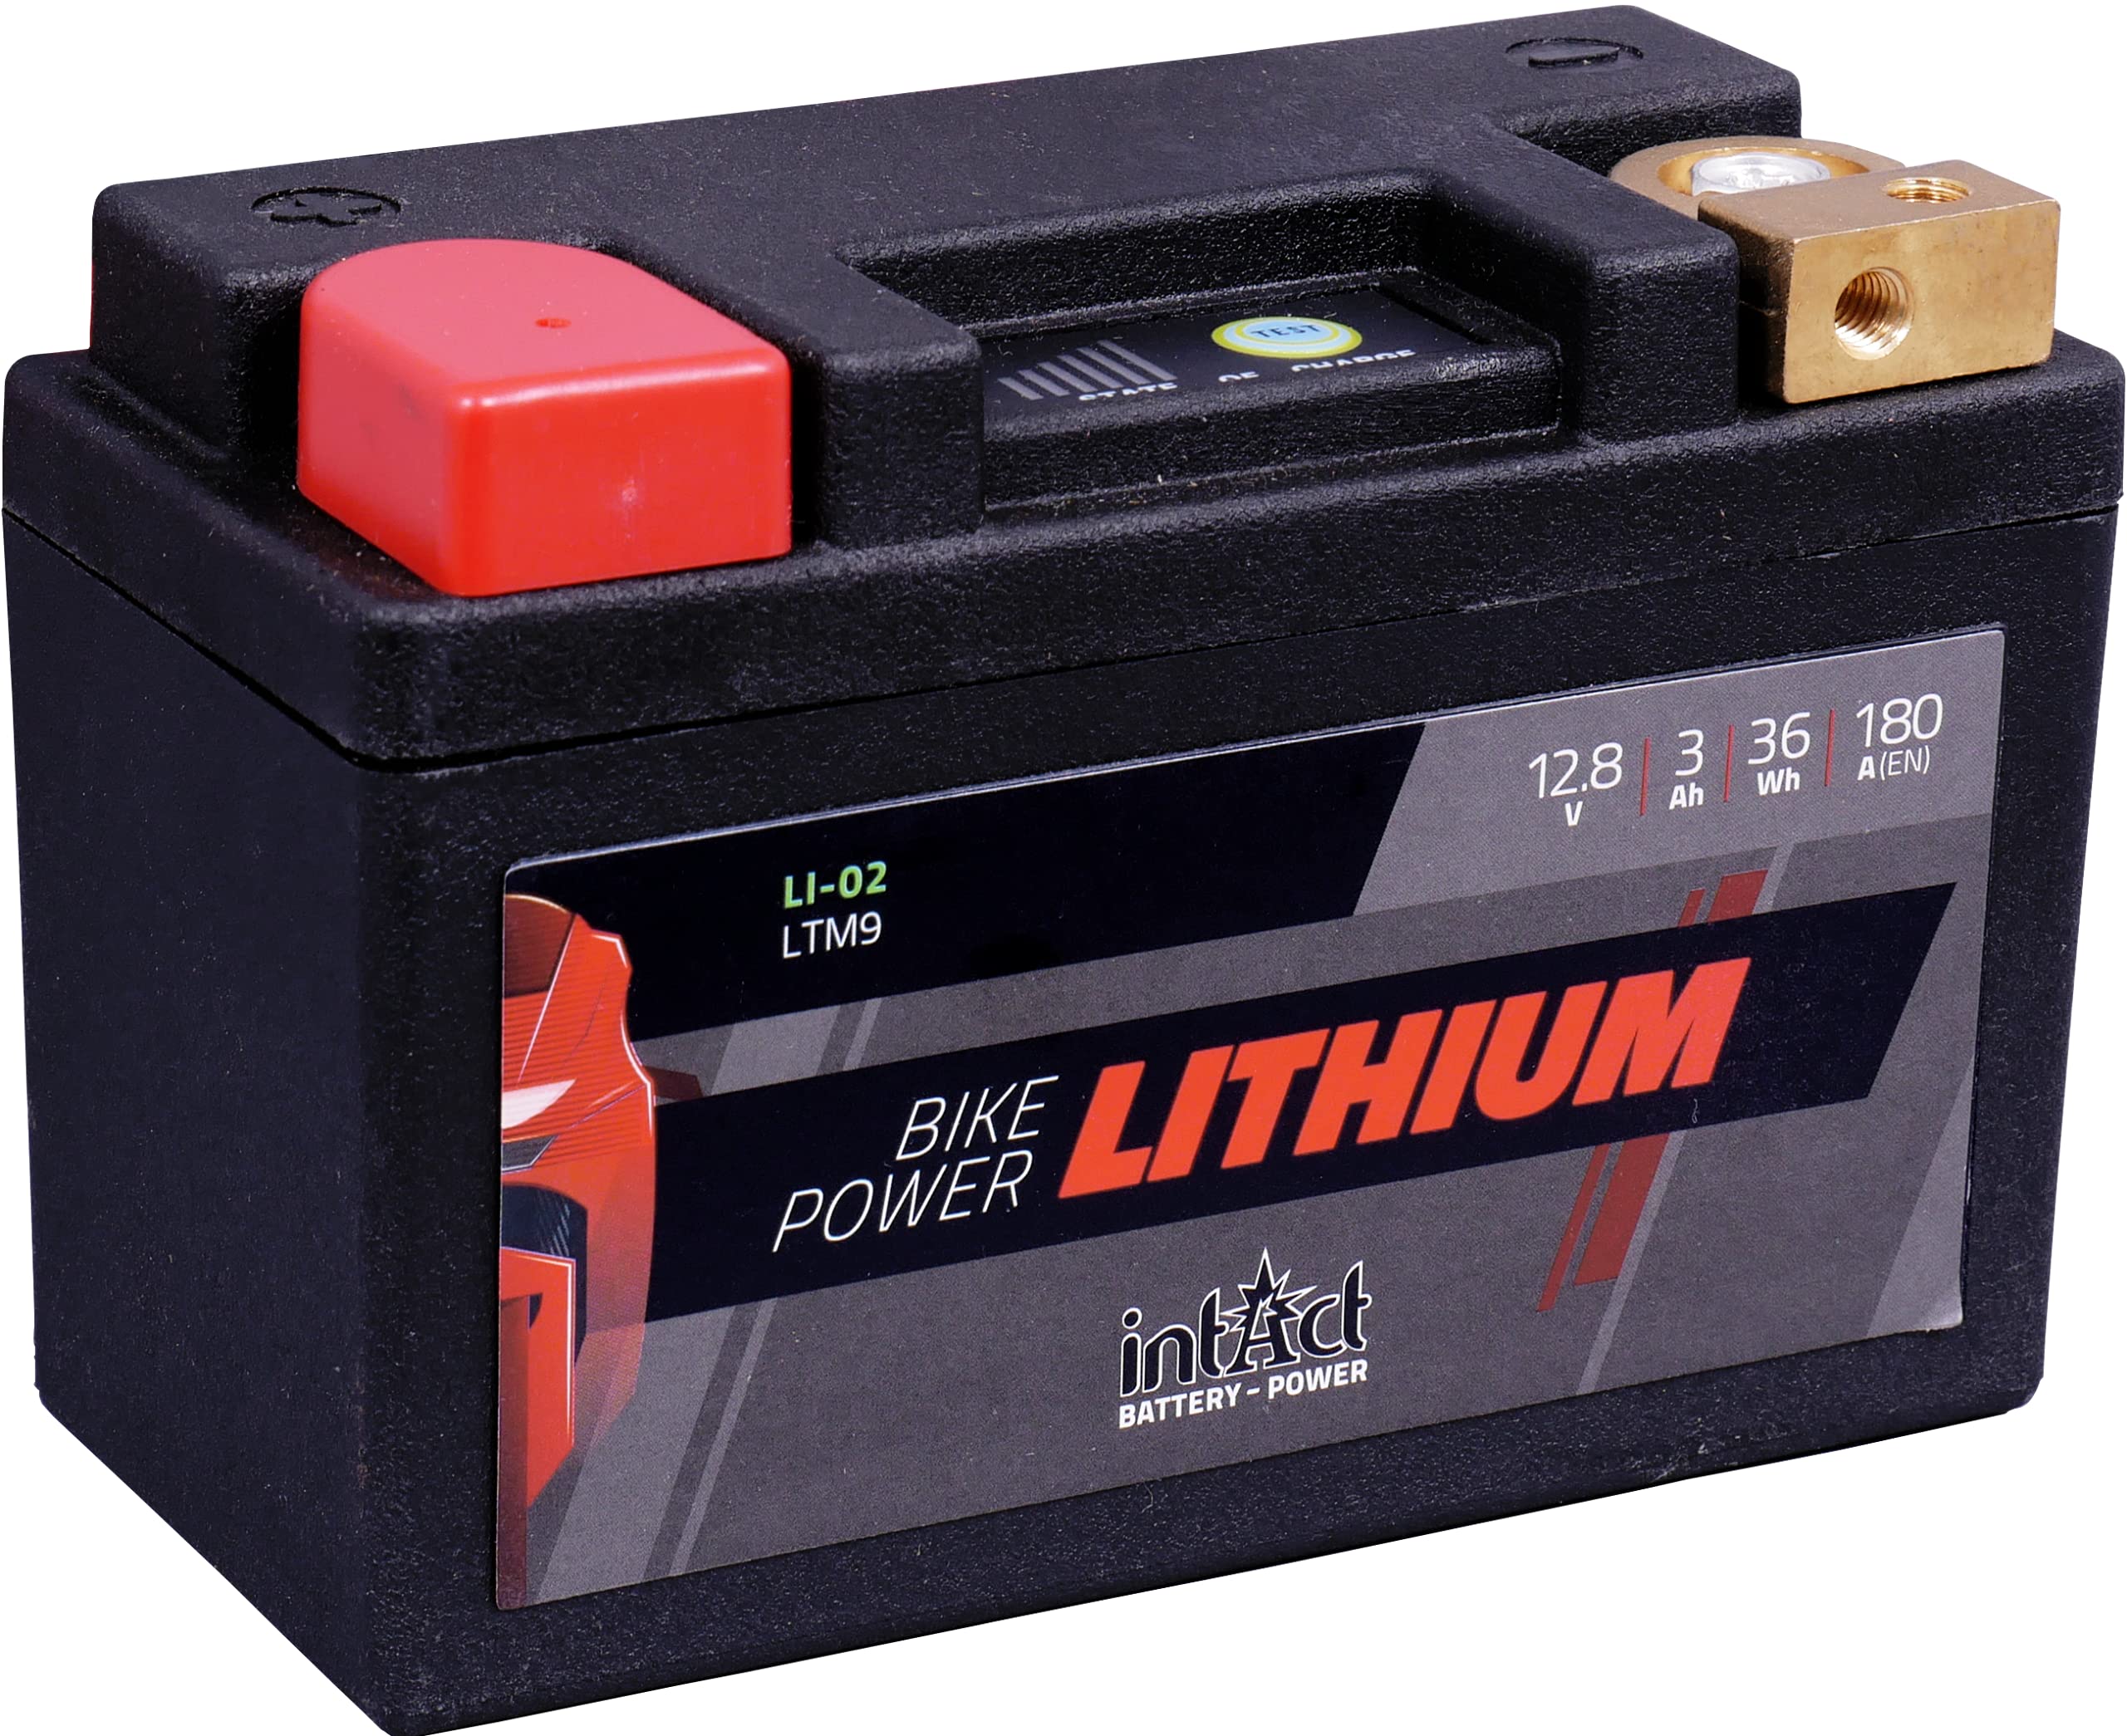 intAct - LITHIUM MOTORRADBATTERIE | Batterie für Roller, Motorrad, Quads uvm. Bis zu 75% Gewichtseinsparung | Bike-Power LI-02, LTM9, 12,8V Batterie, 3 AH (c10), 36 Wh, 180 A (CCA) | Maße: 134x65x92mm